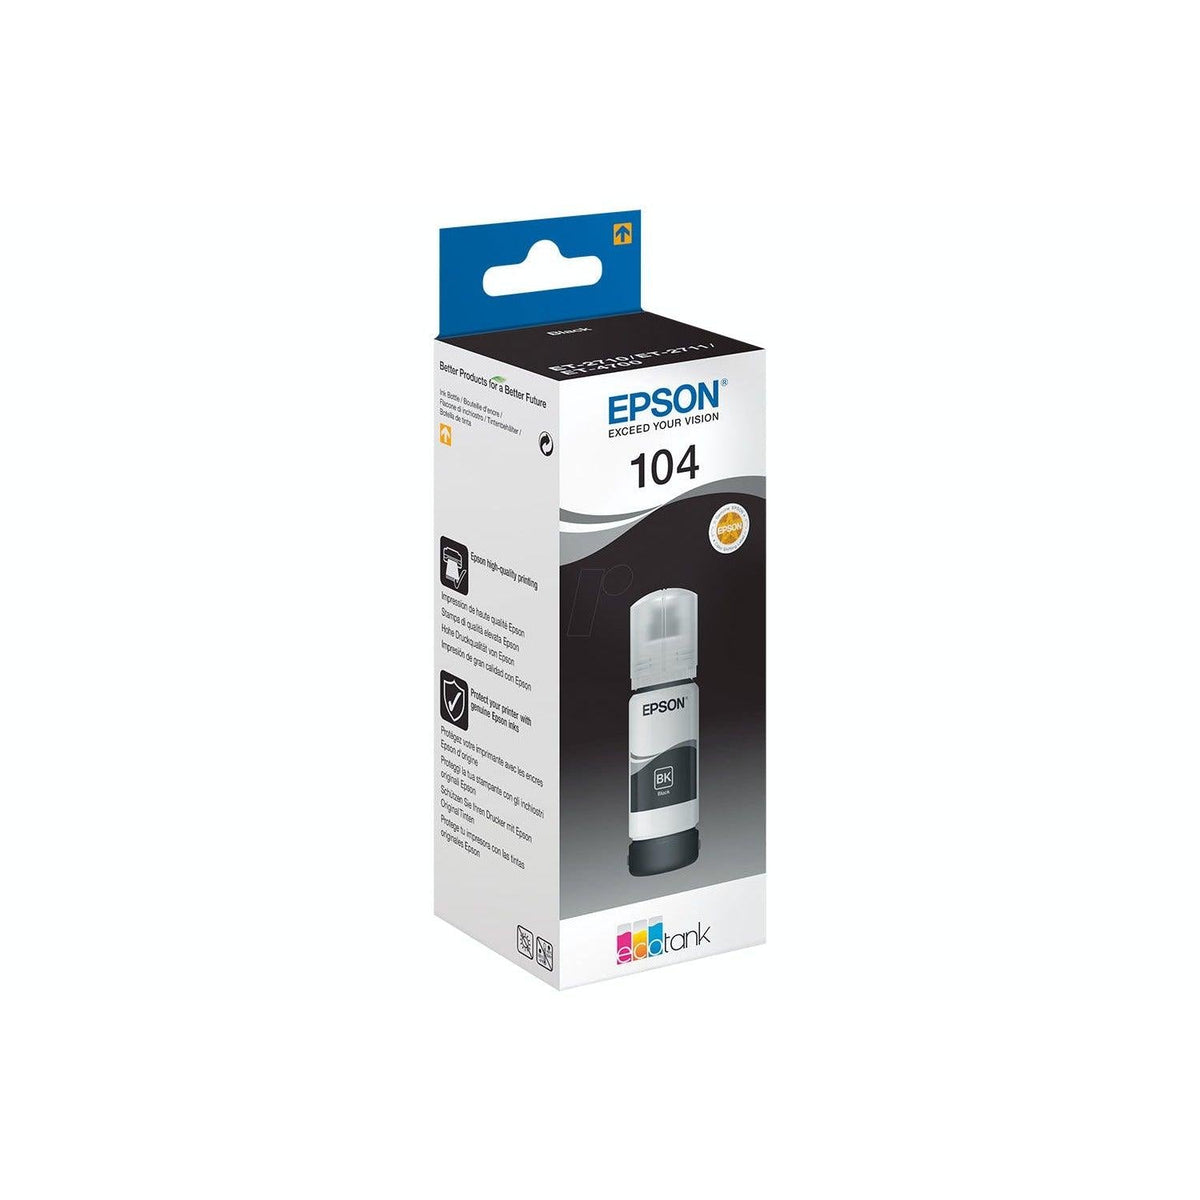 SEPS1430_Epson 104 EcoTank Ink Bottle - Black-2 (7424813531324)